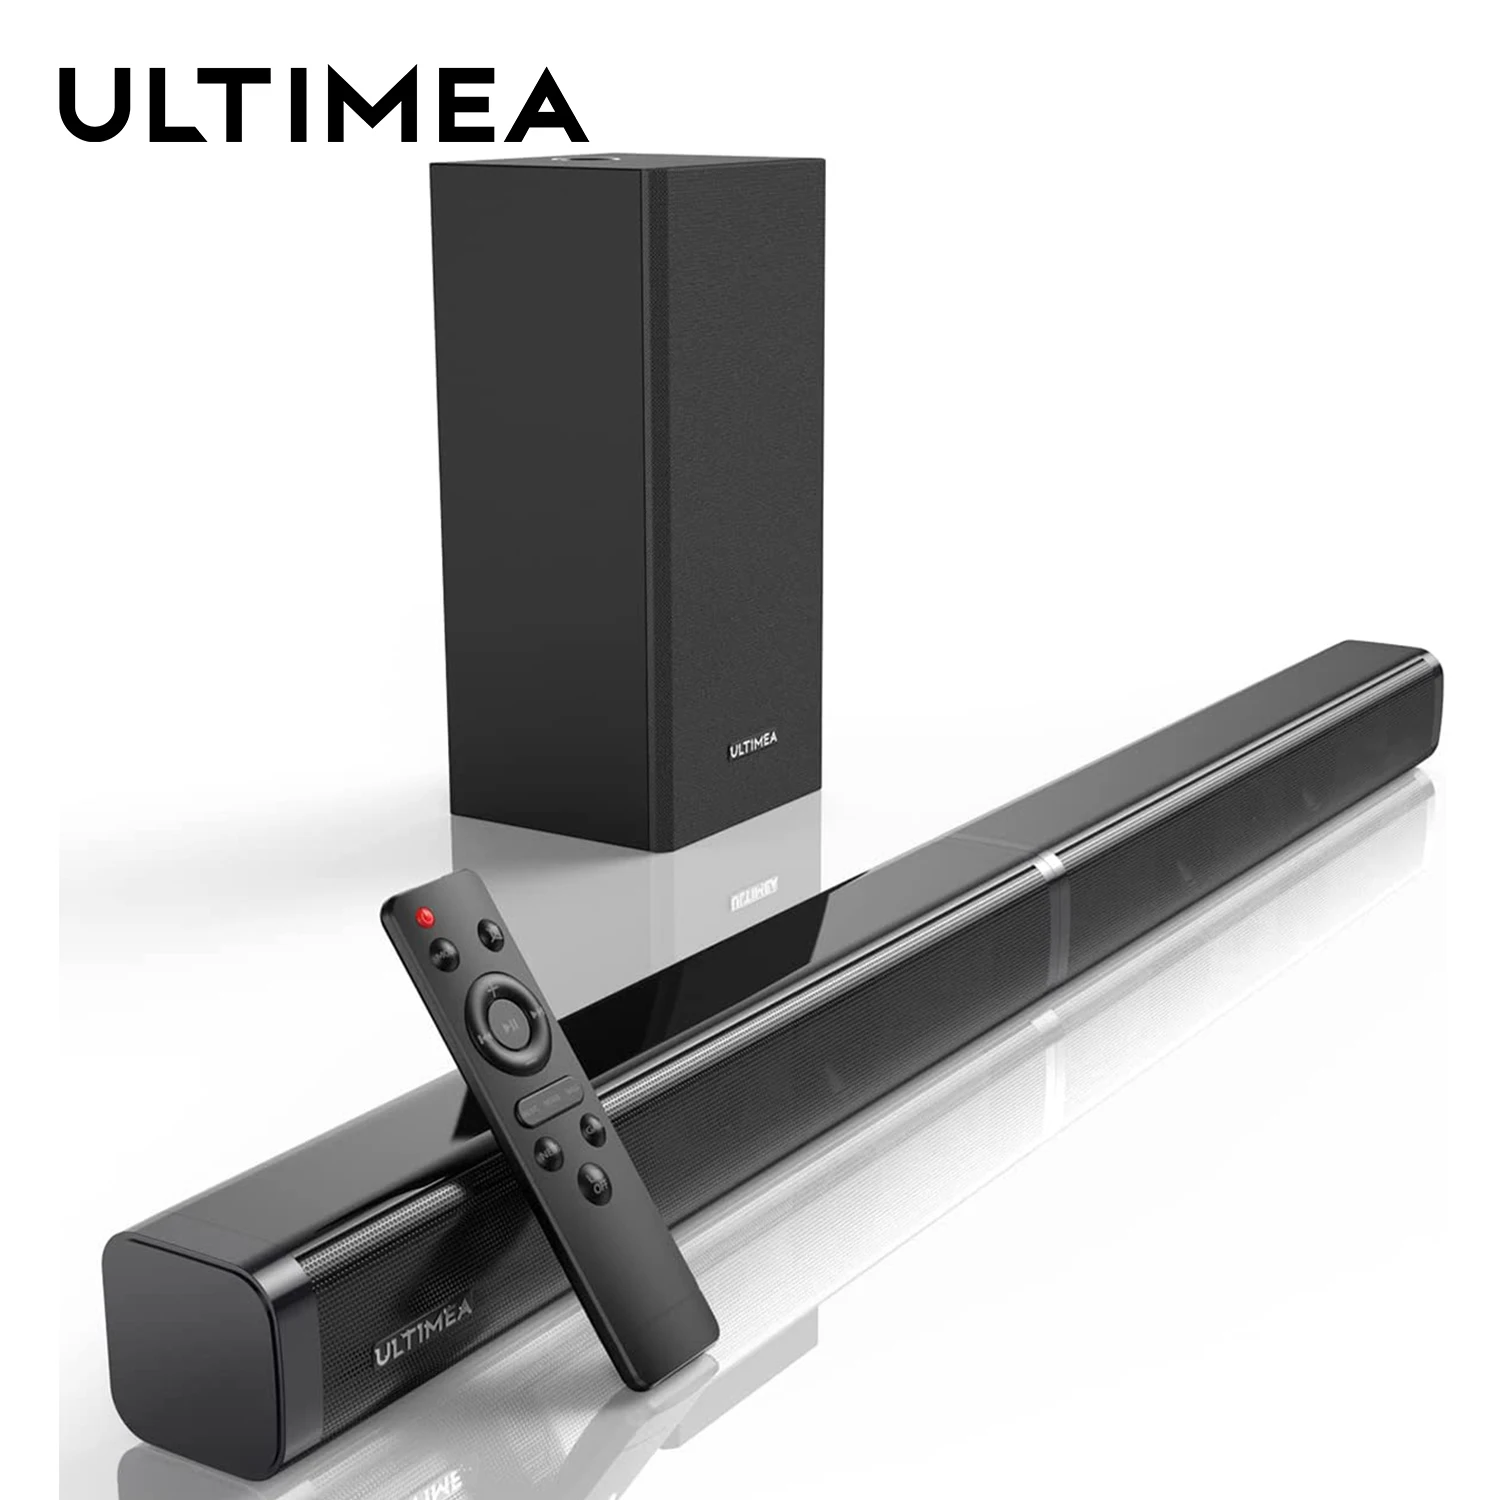 

ULTIMEA 100W TV SoundBar 2.1 Bluetooth Speaker 5.0 Home Theater Sound System 3D Surround Sound Bar Subwoofer Bluetooth Speakers